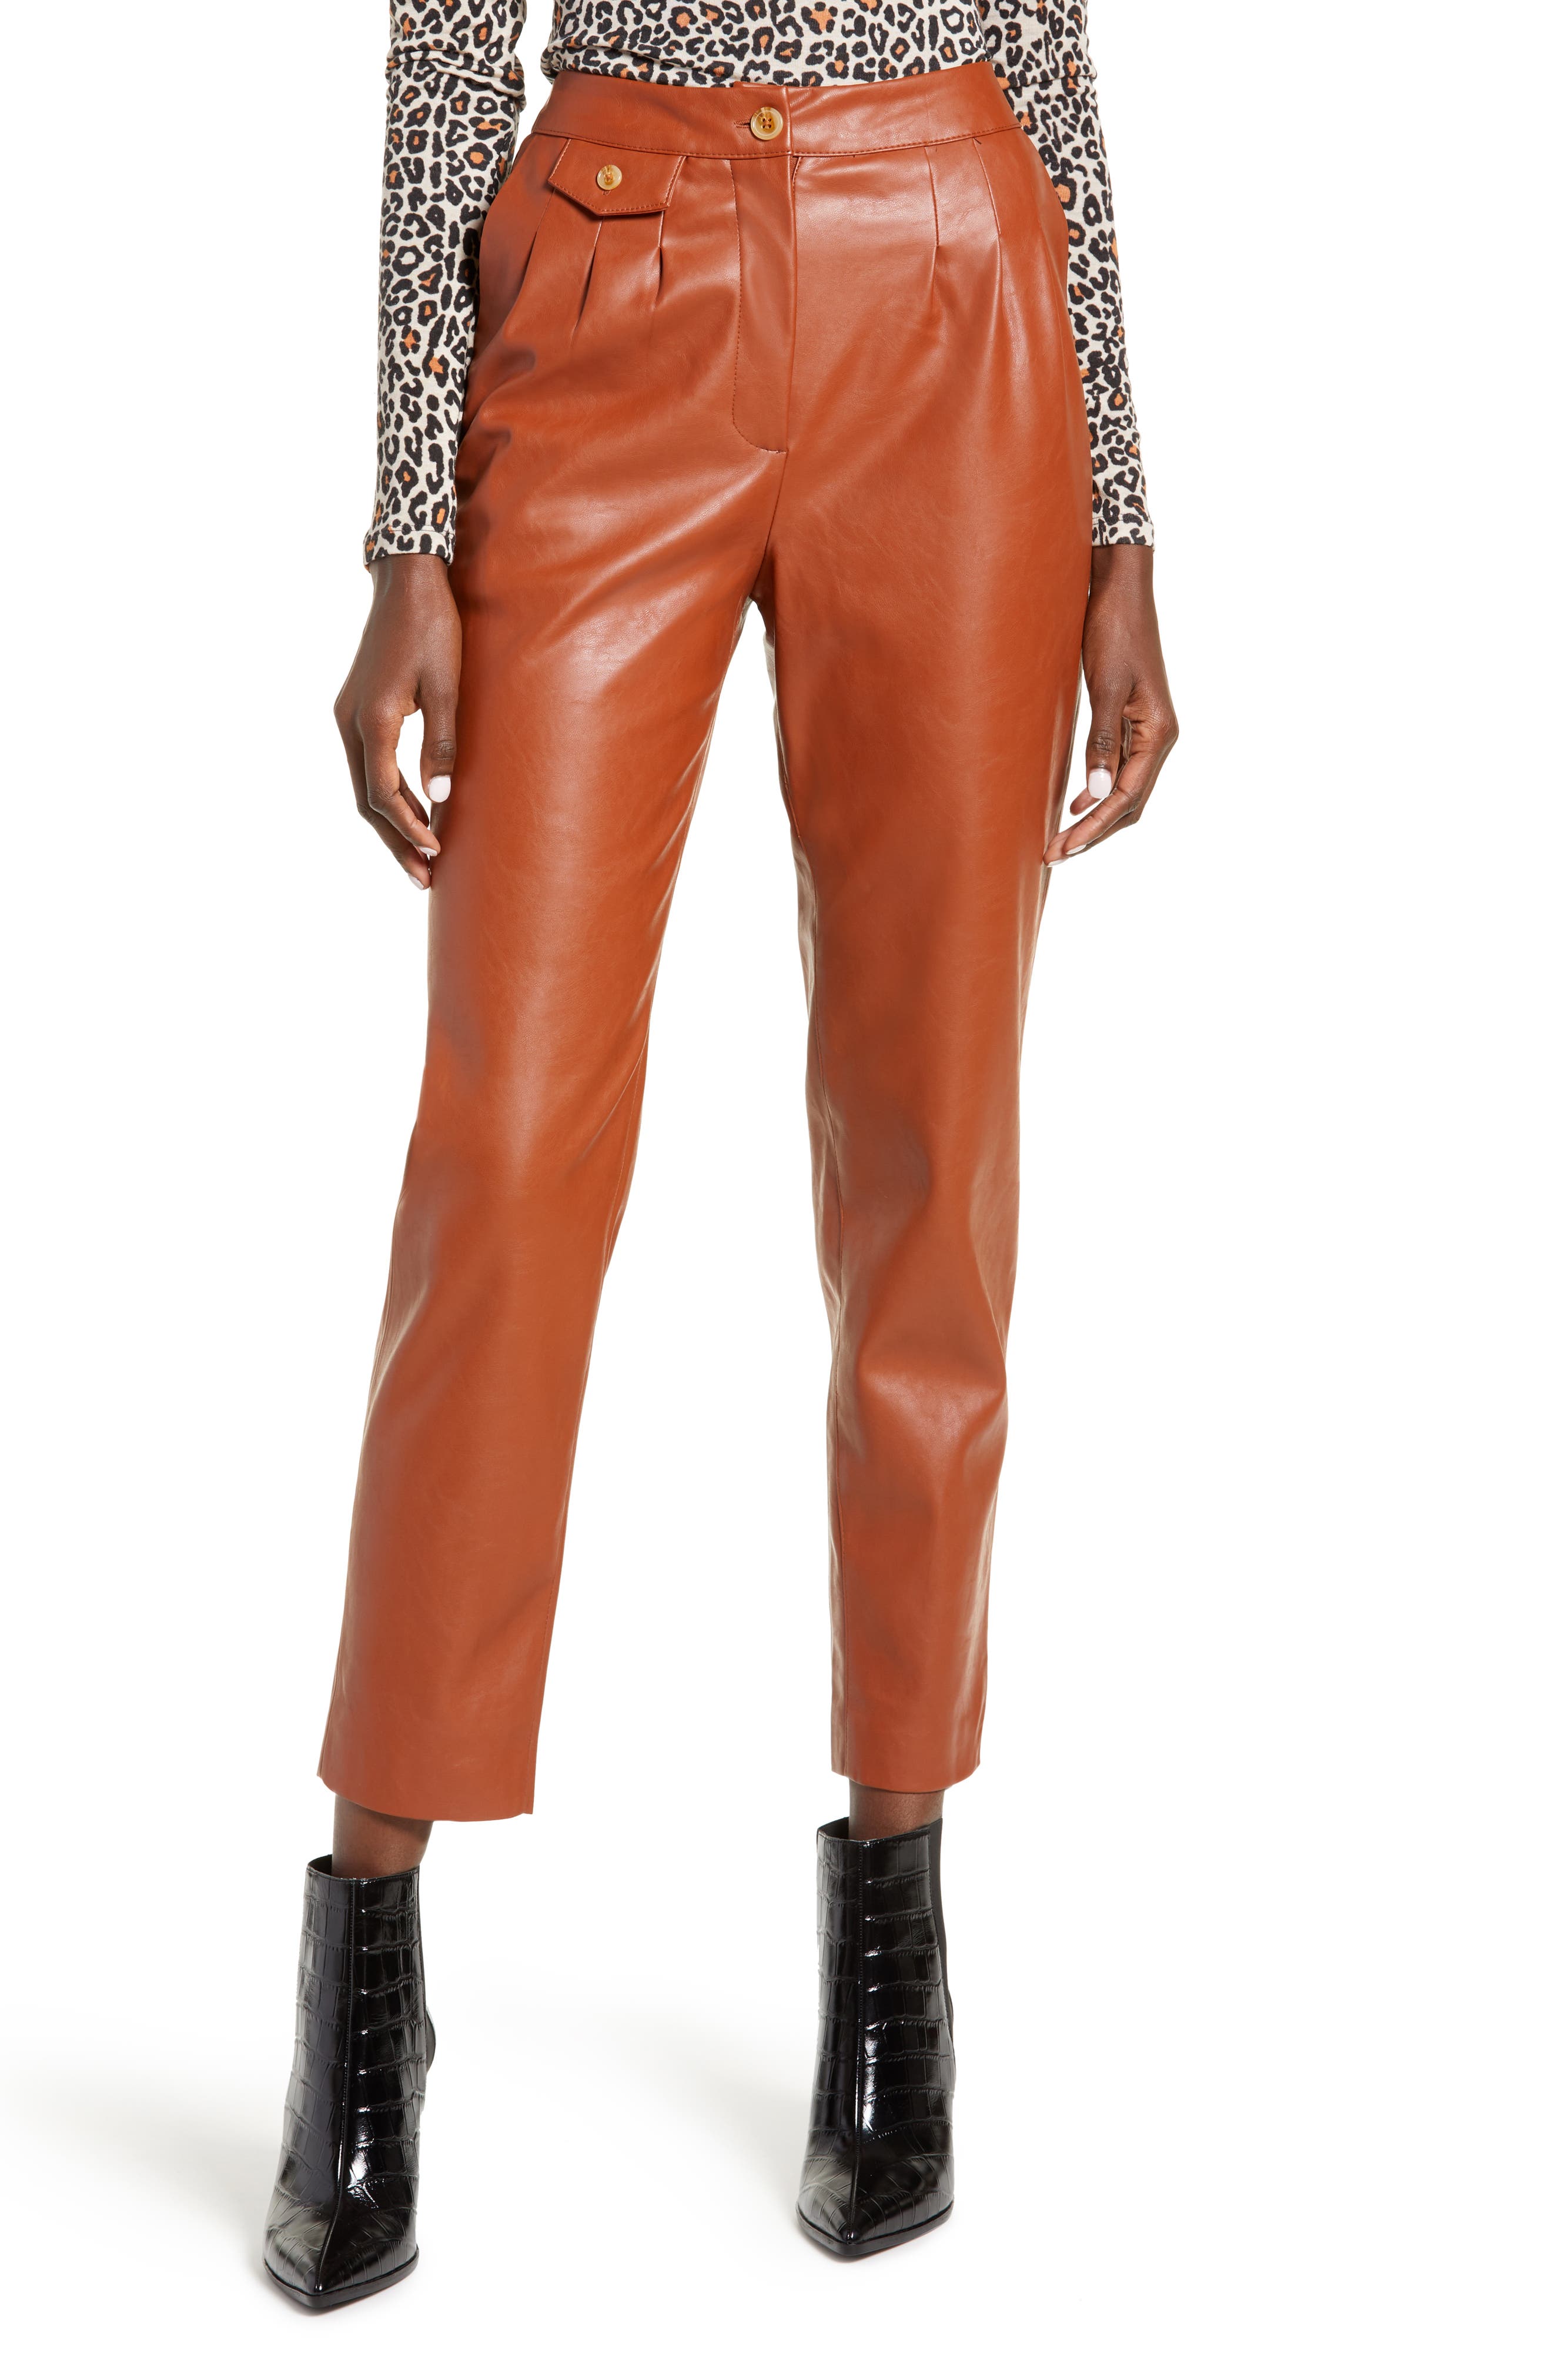 orange patent leather pants